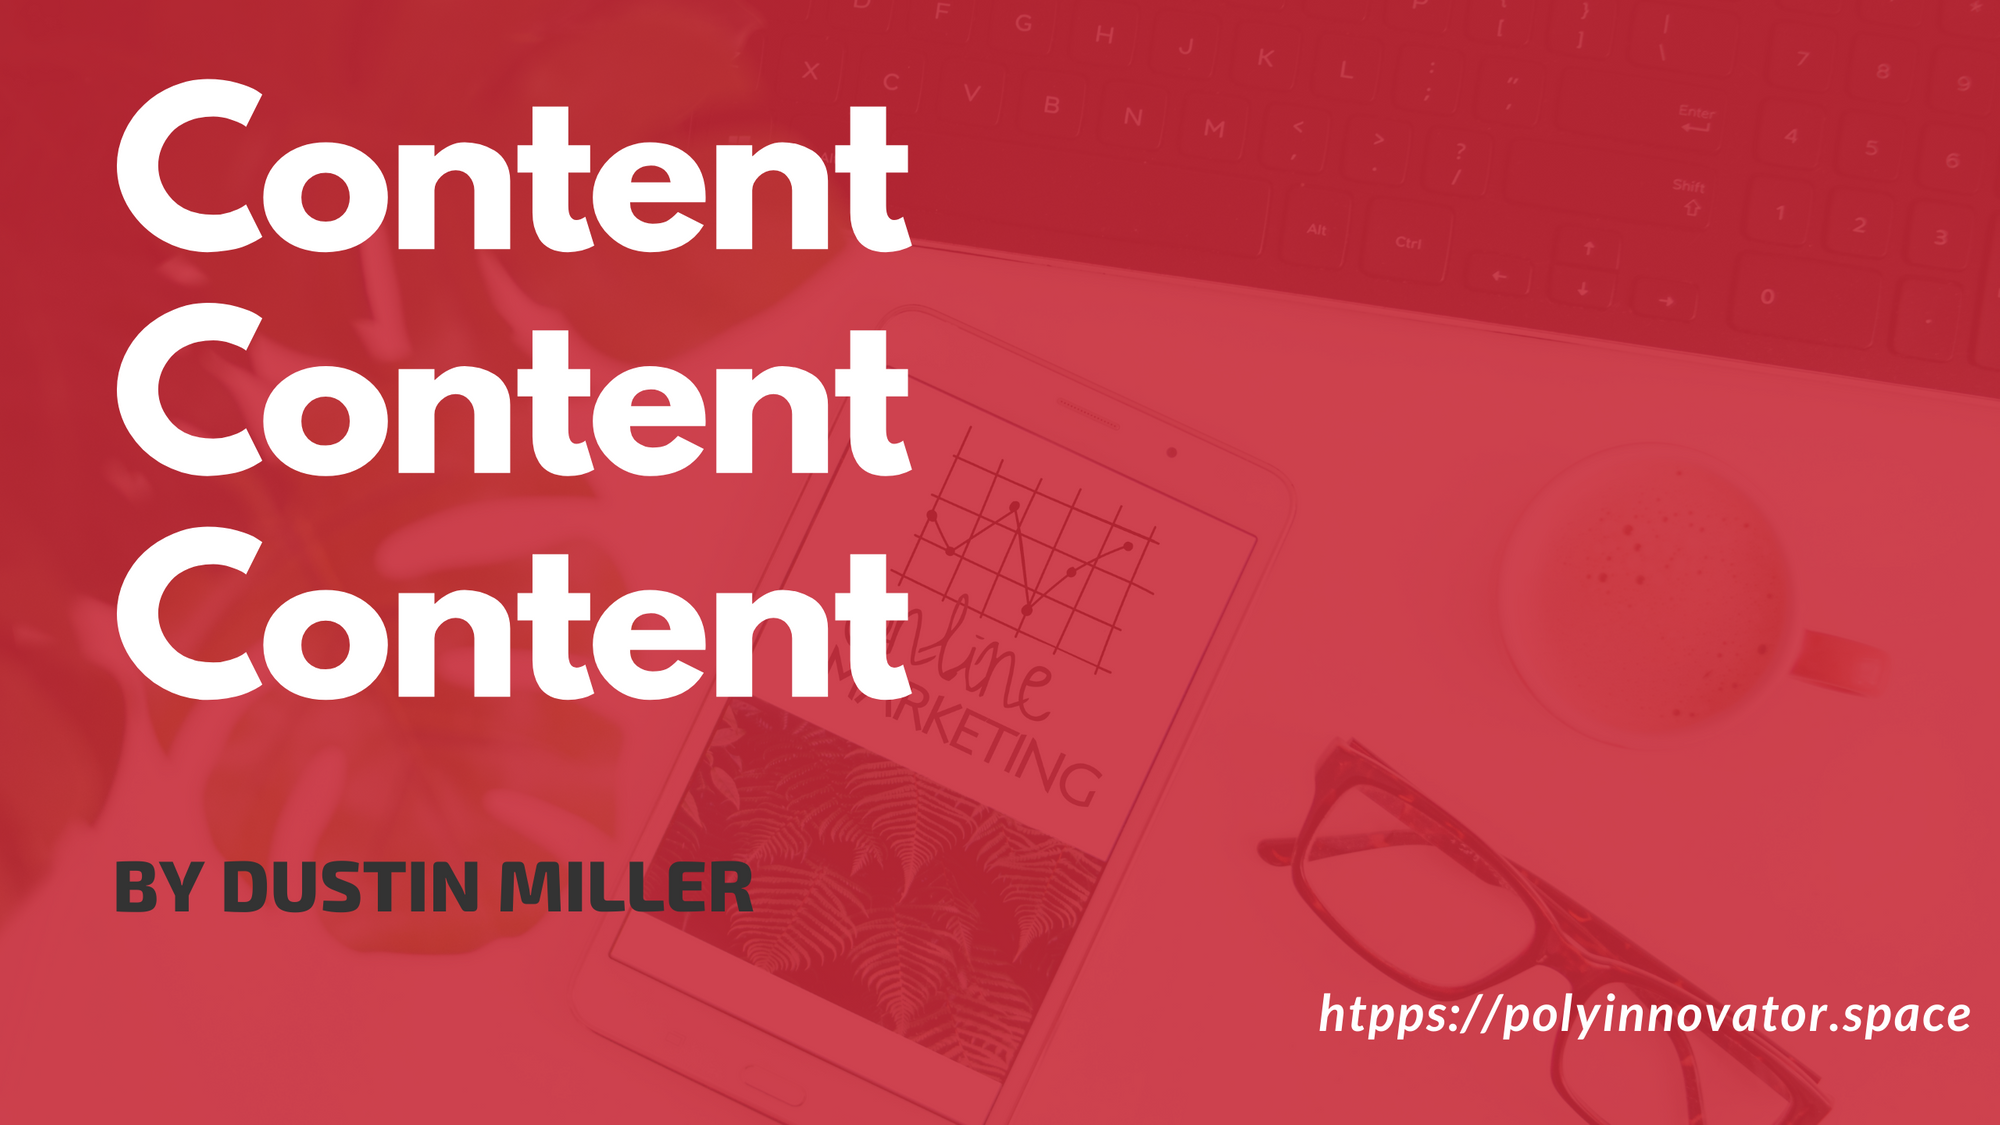 Content Content Content